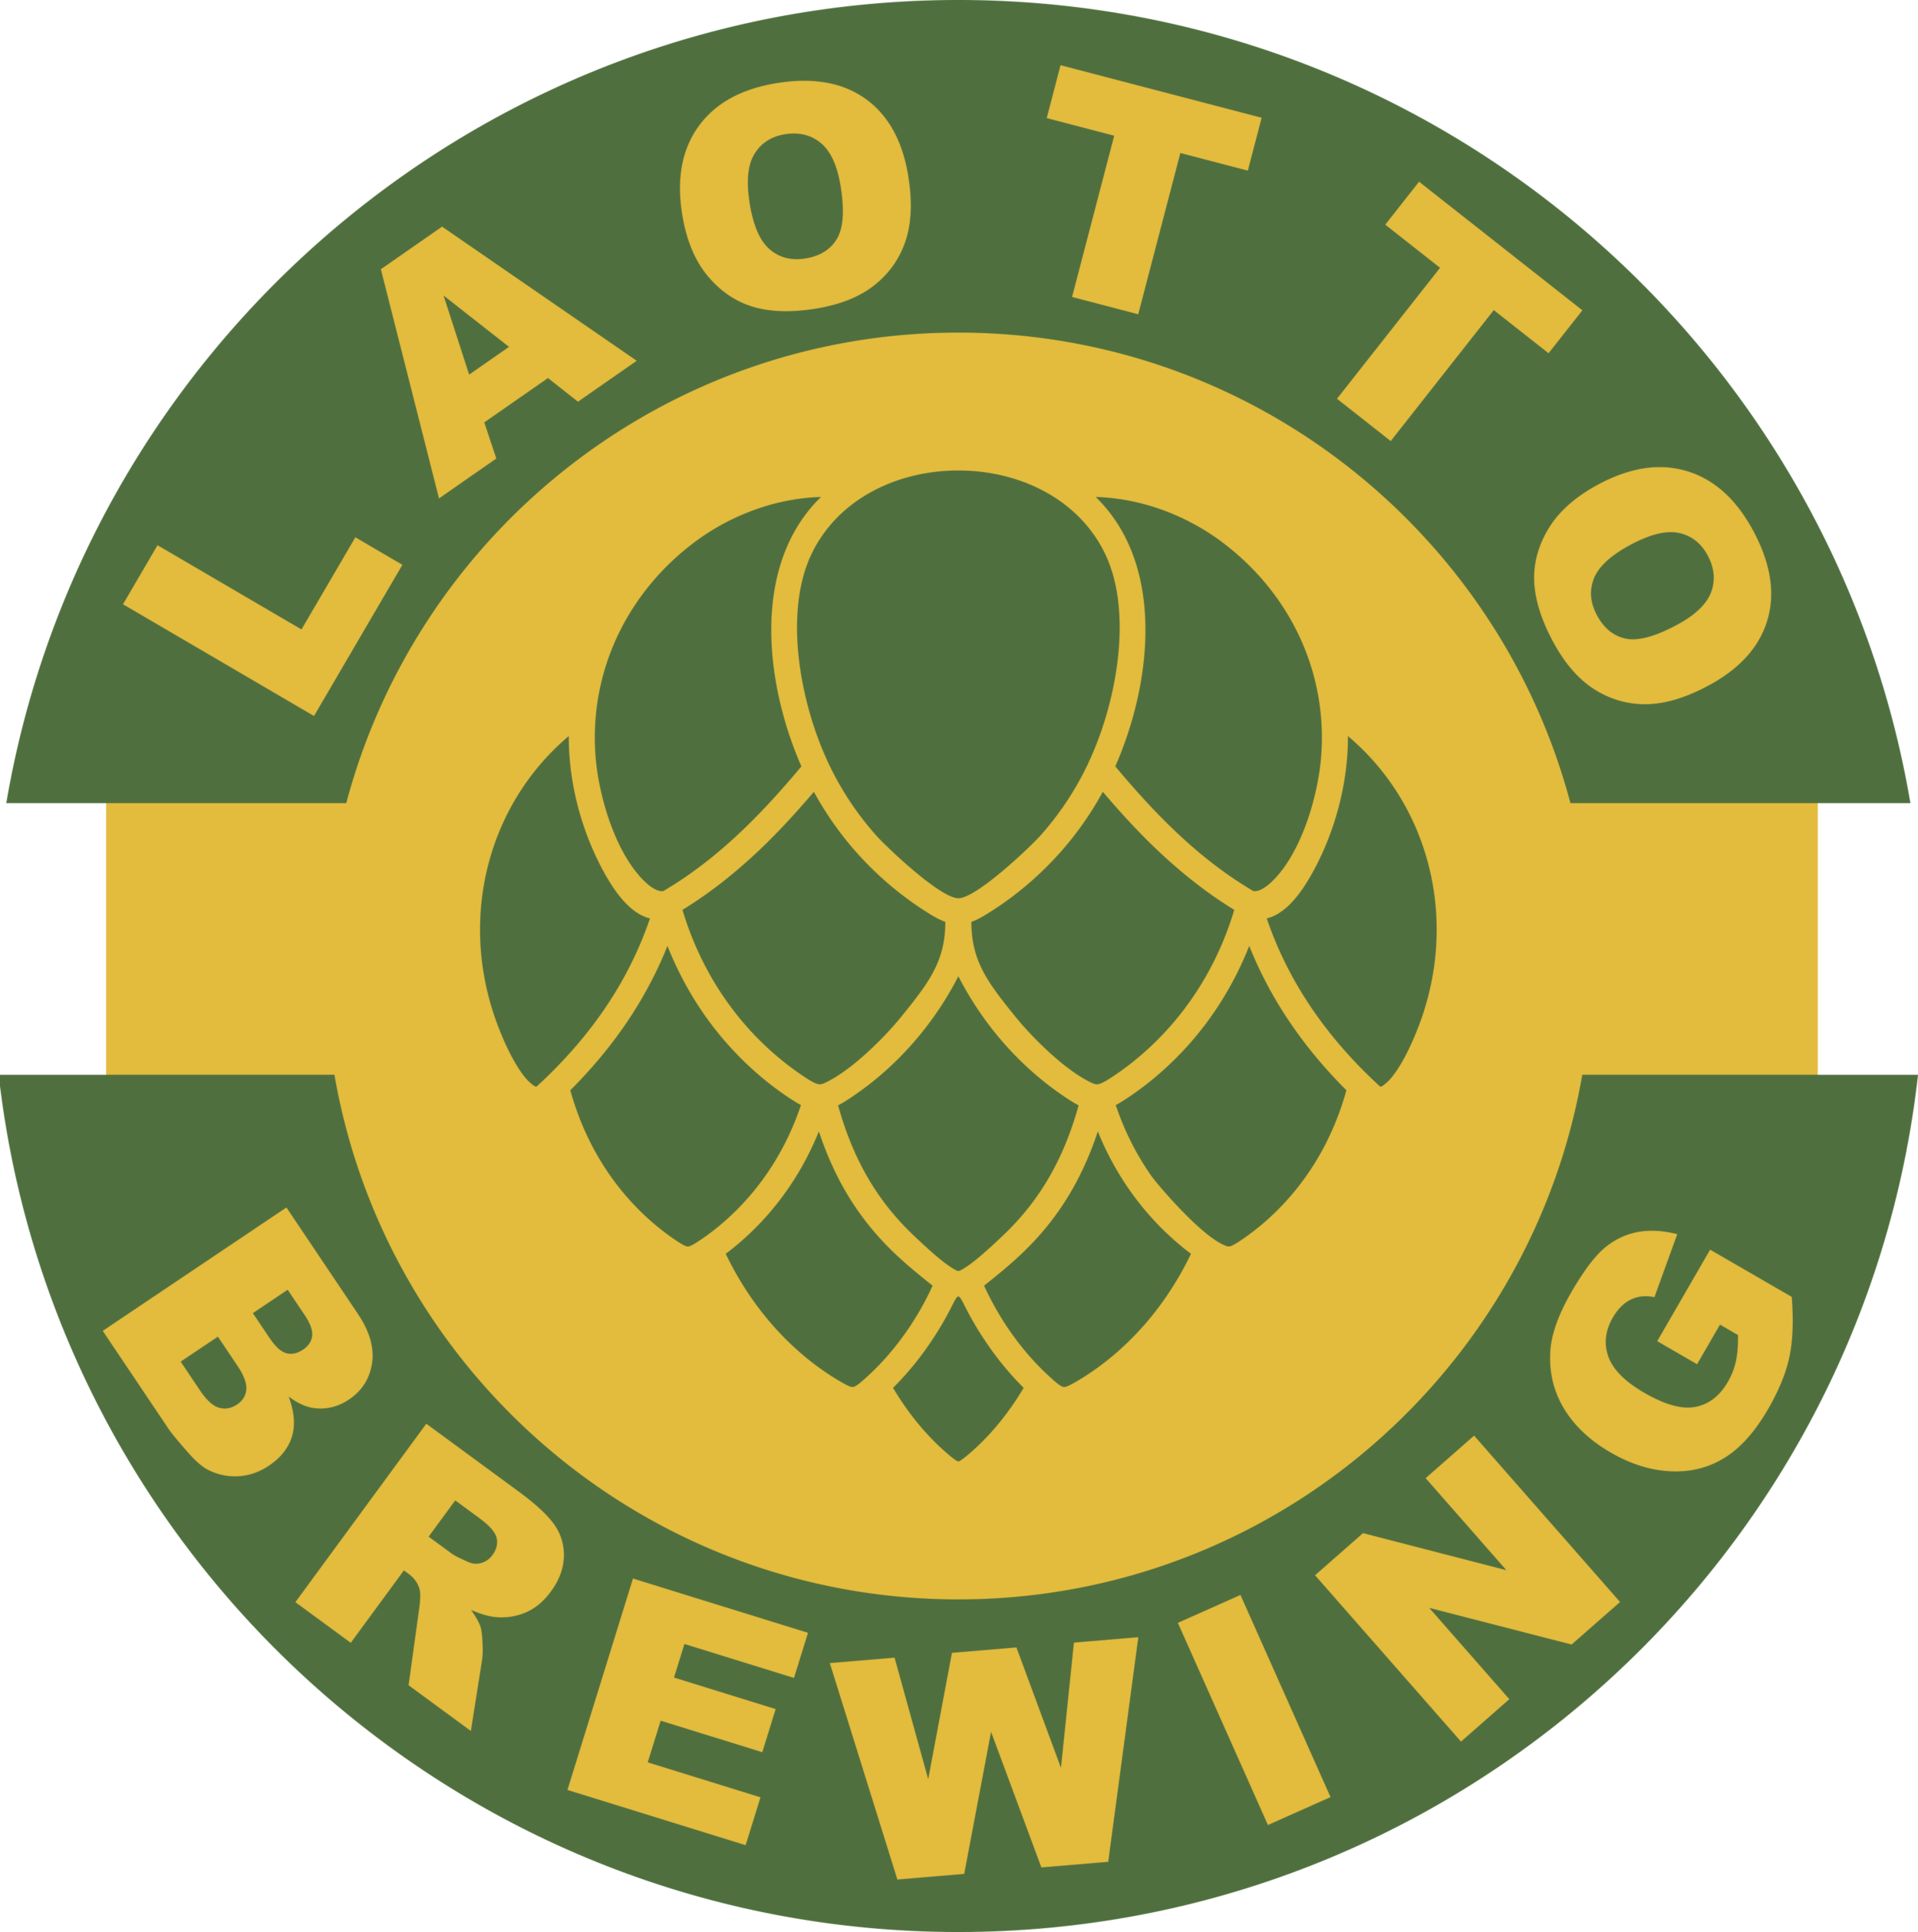 LaOtto Brewing